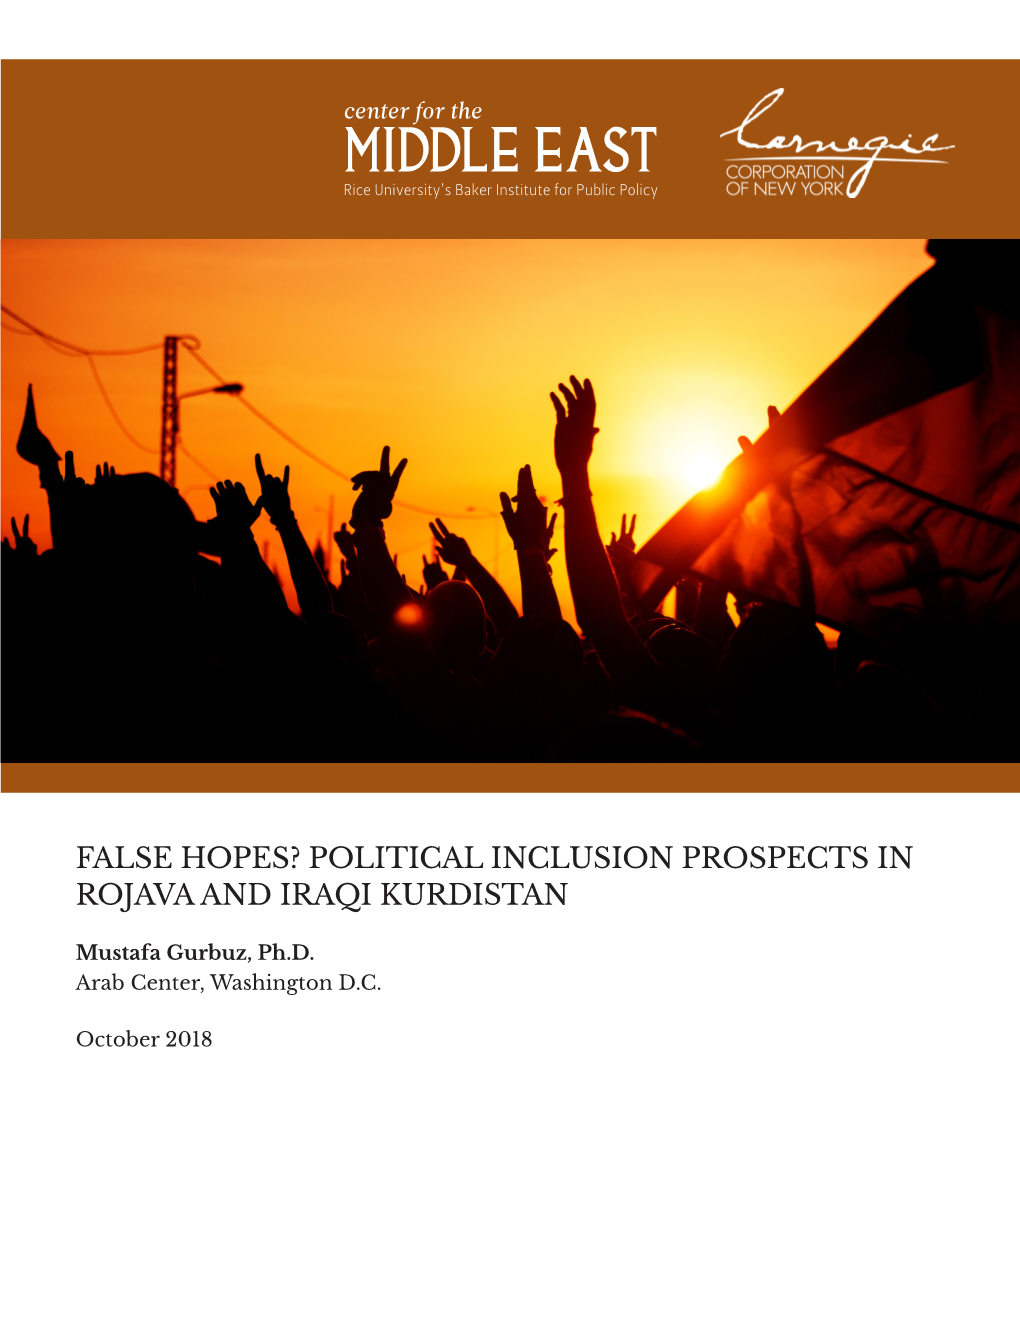 Political Inclusion Prospects in Rojava and Iraqi Kurdistan